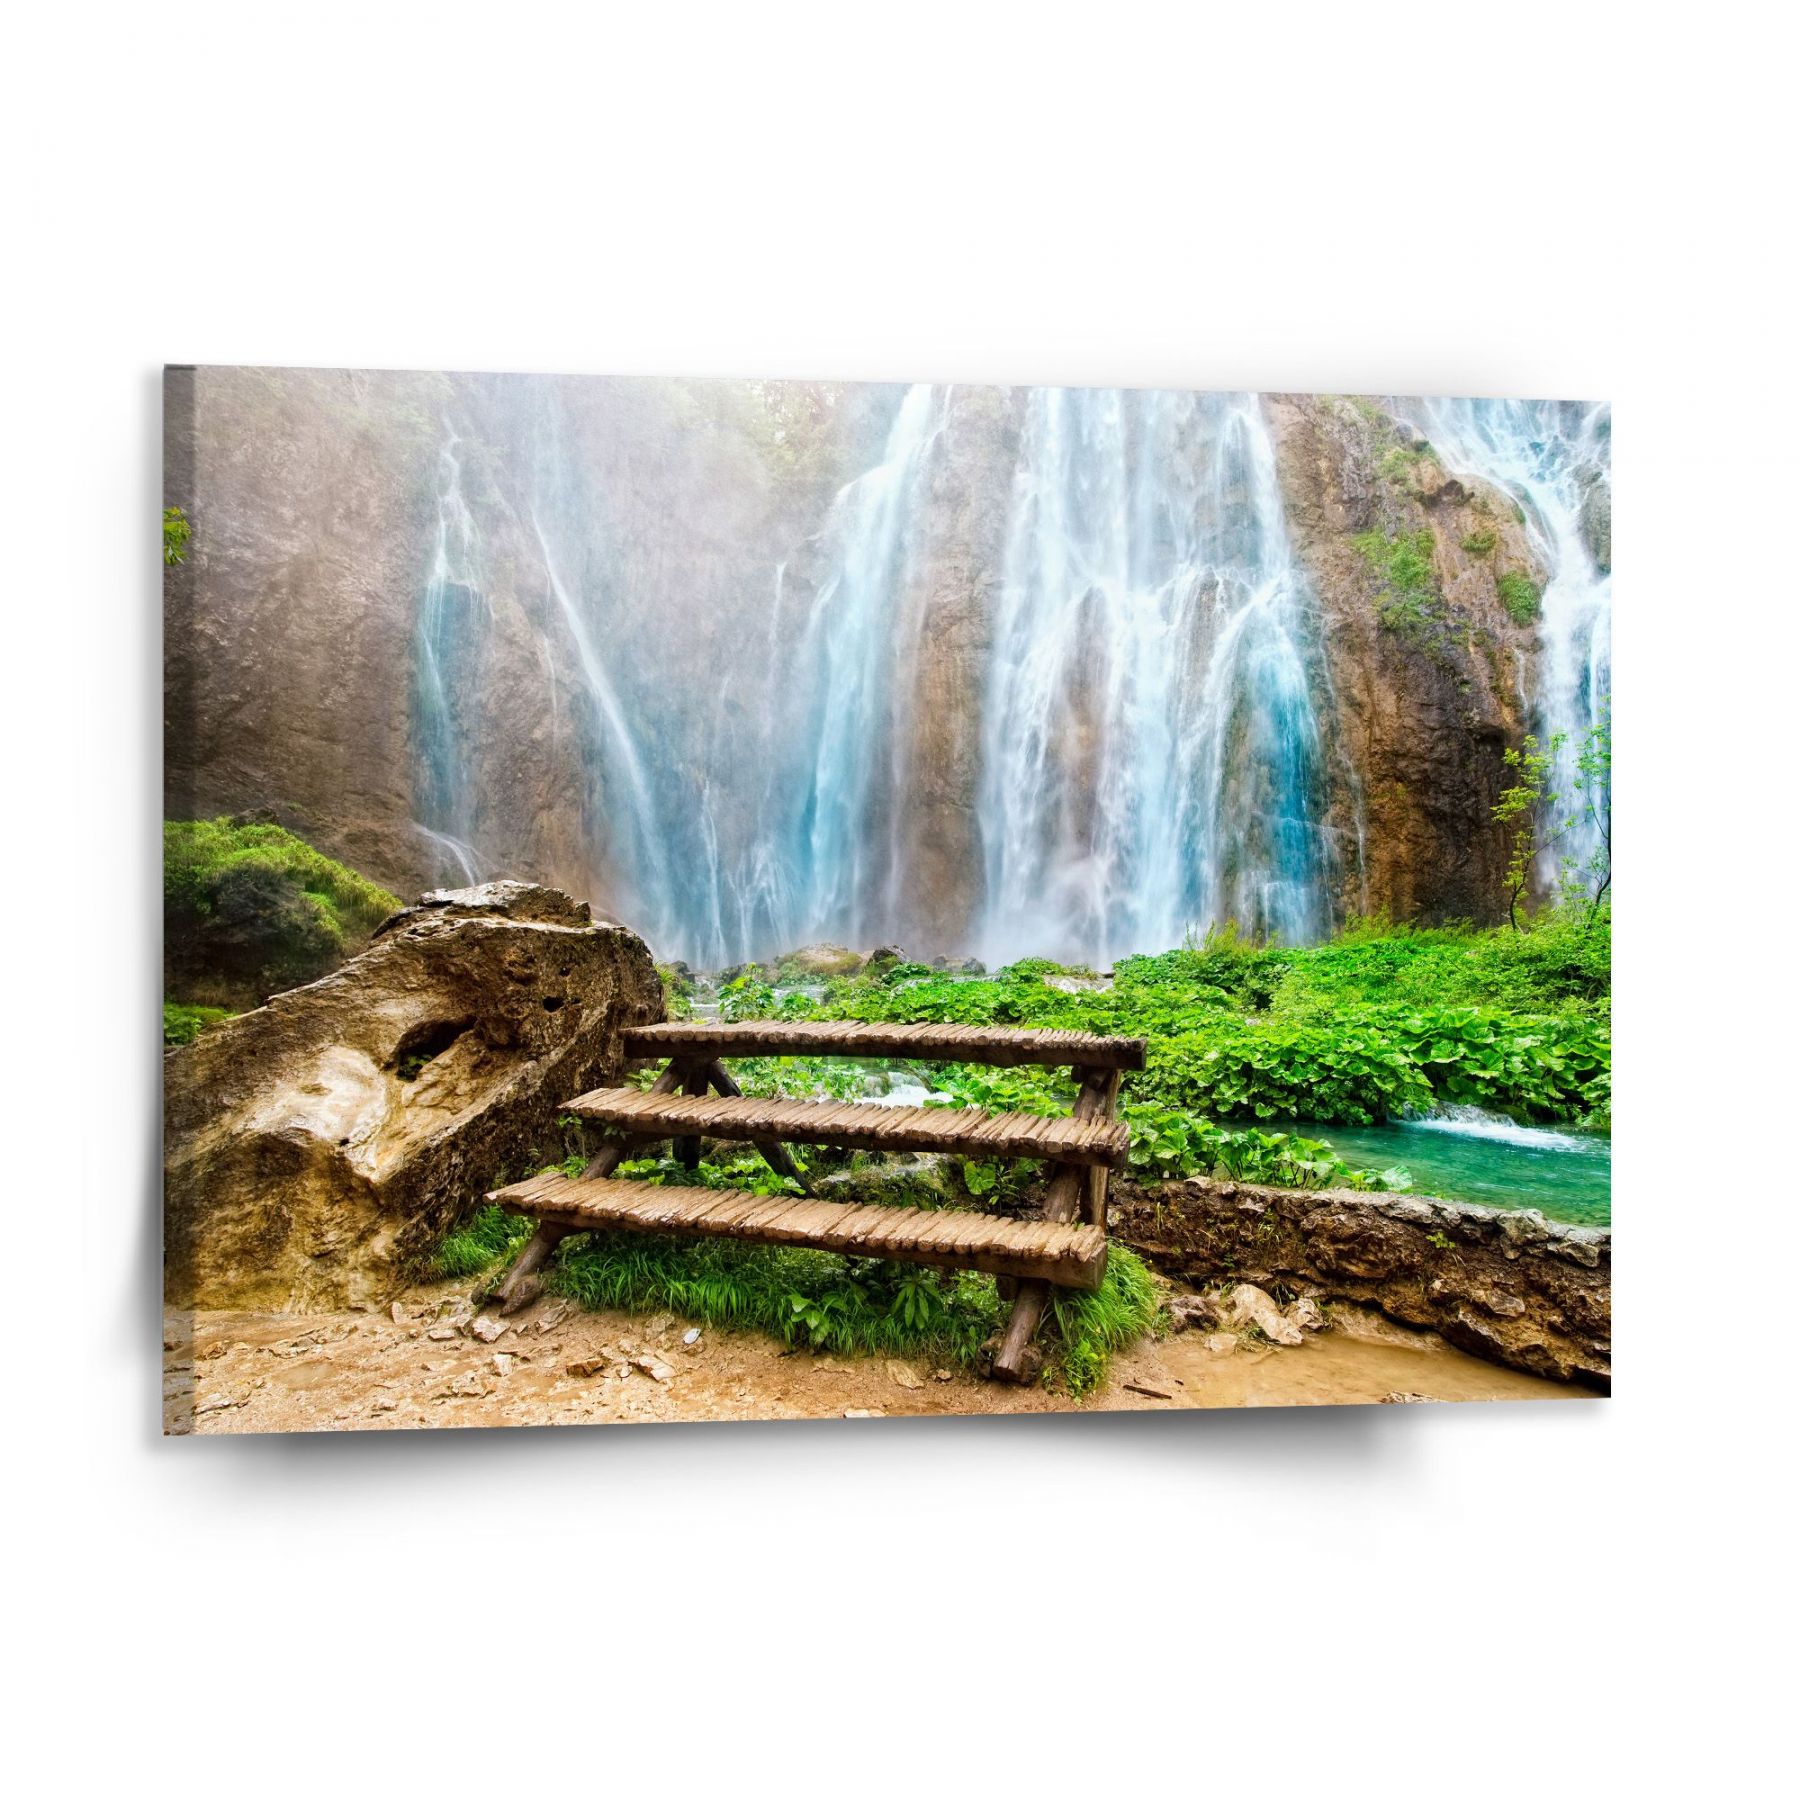 Obraz SABLIO - Posezení u vodopádu 150x110 cm - E-shop Sablo s.r.o.